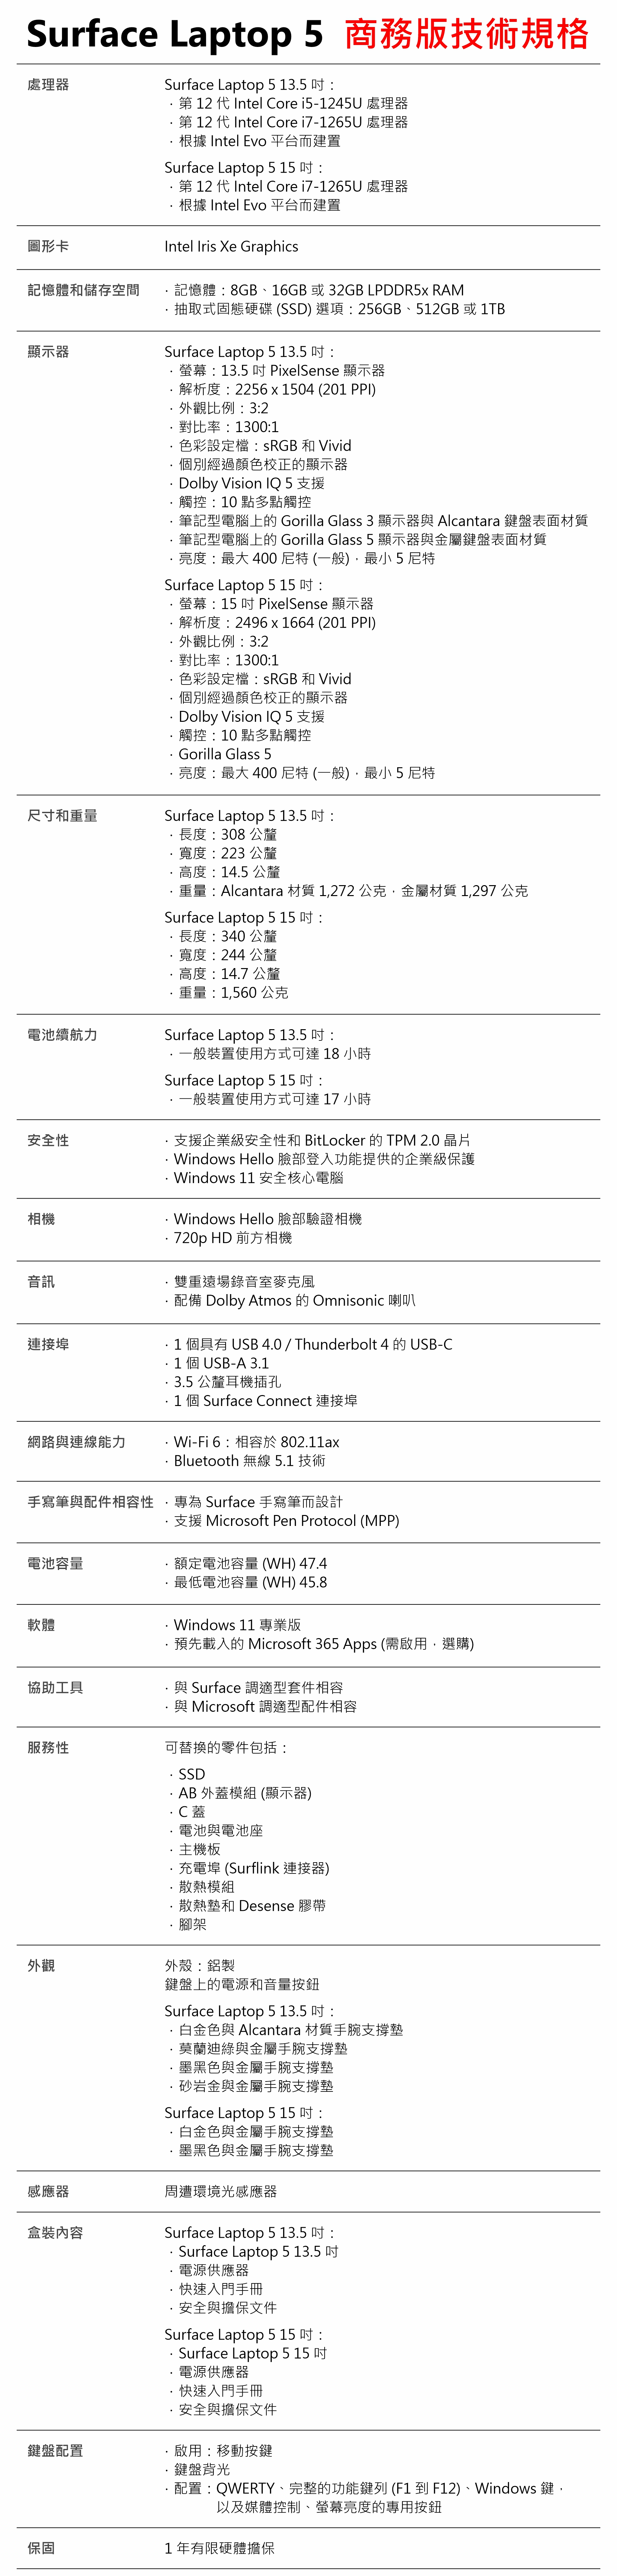 SurfaceLaptop 5 規格